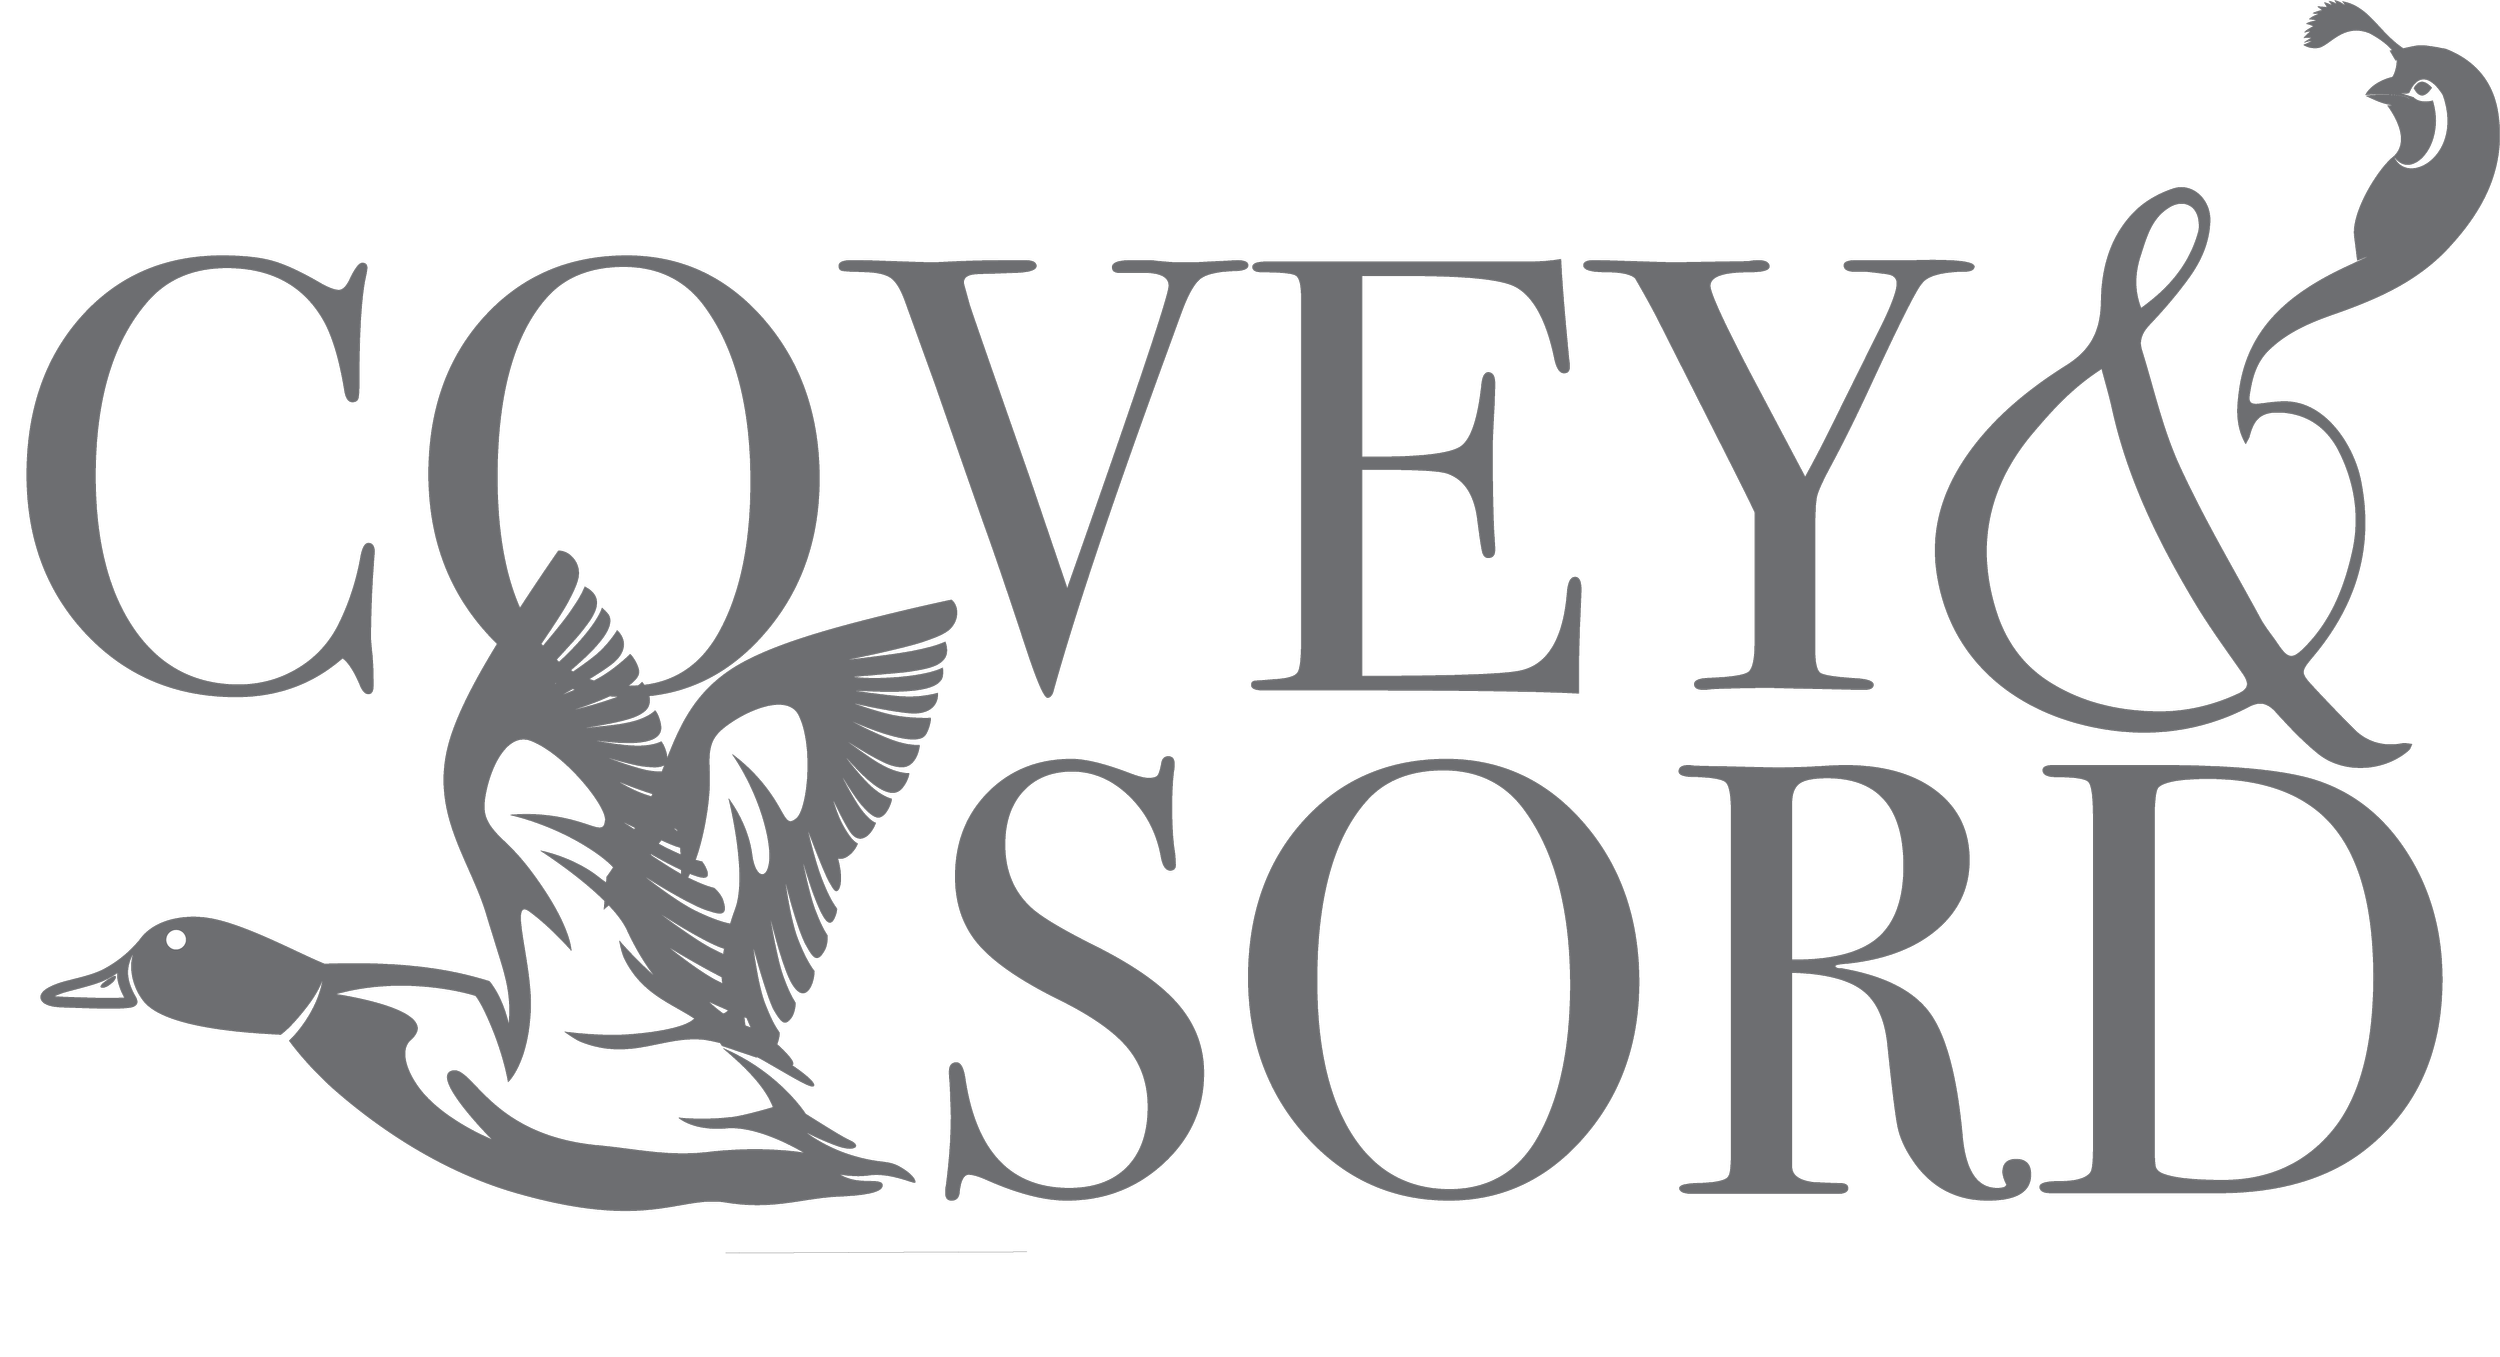 Covey and Sord Logo grey no border.png